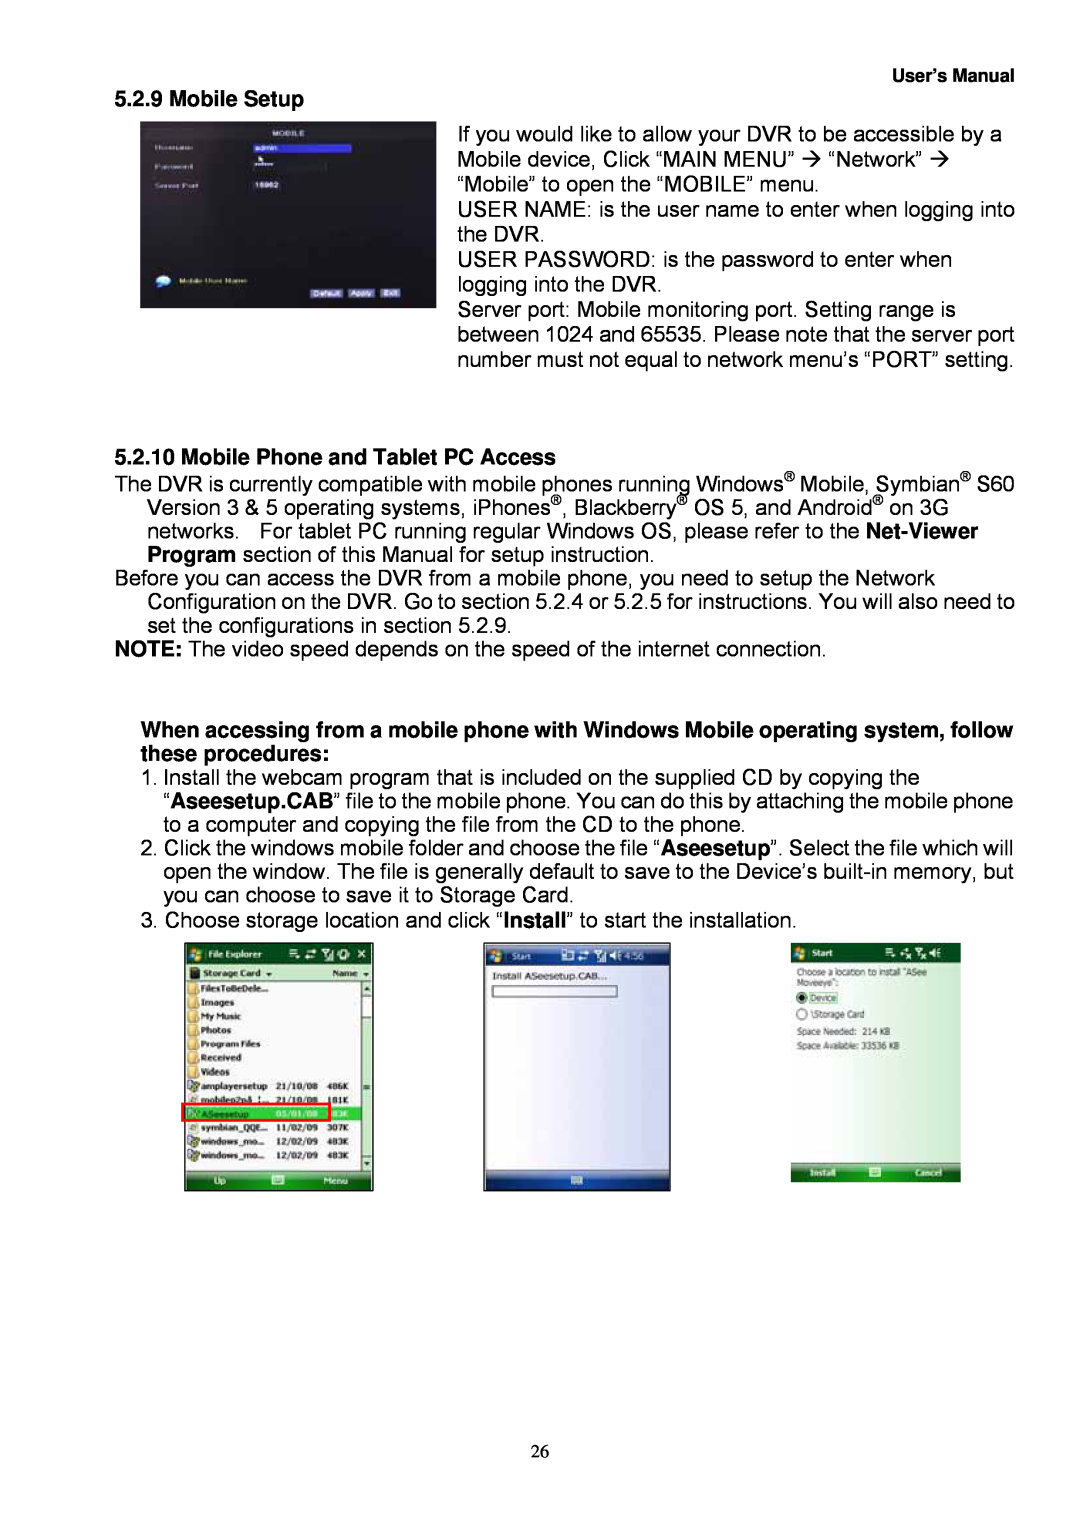 Night Owl Optics Night Owl, 4BL manual Mobile Setup, Mobile Phone and Tablet PC Access 